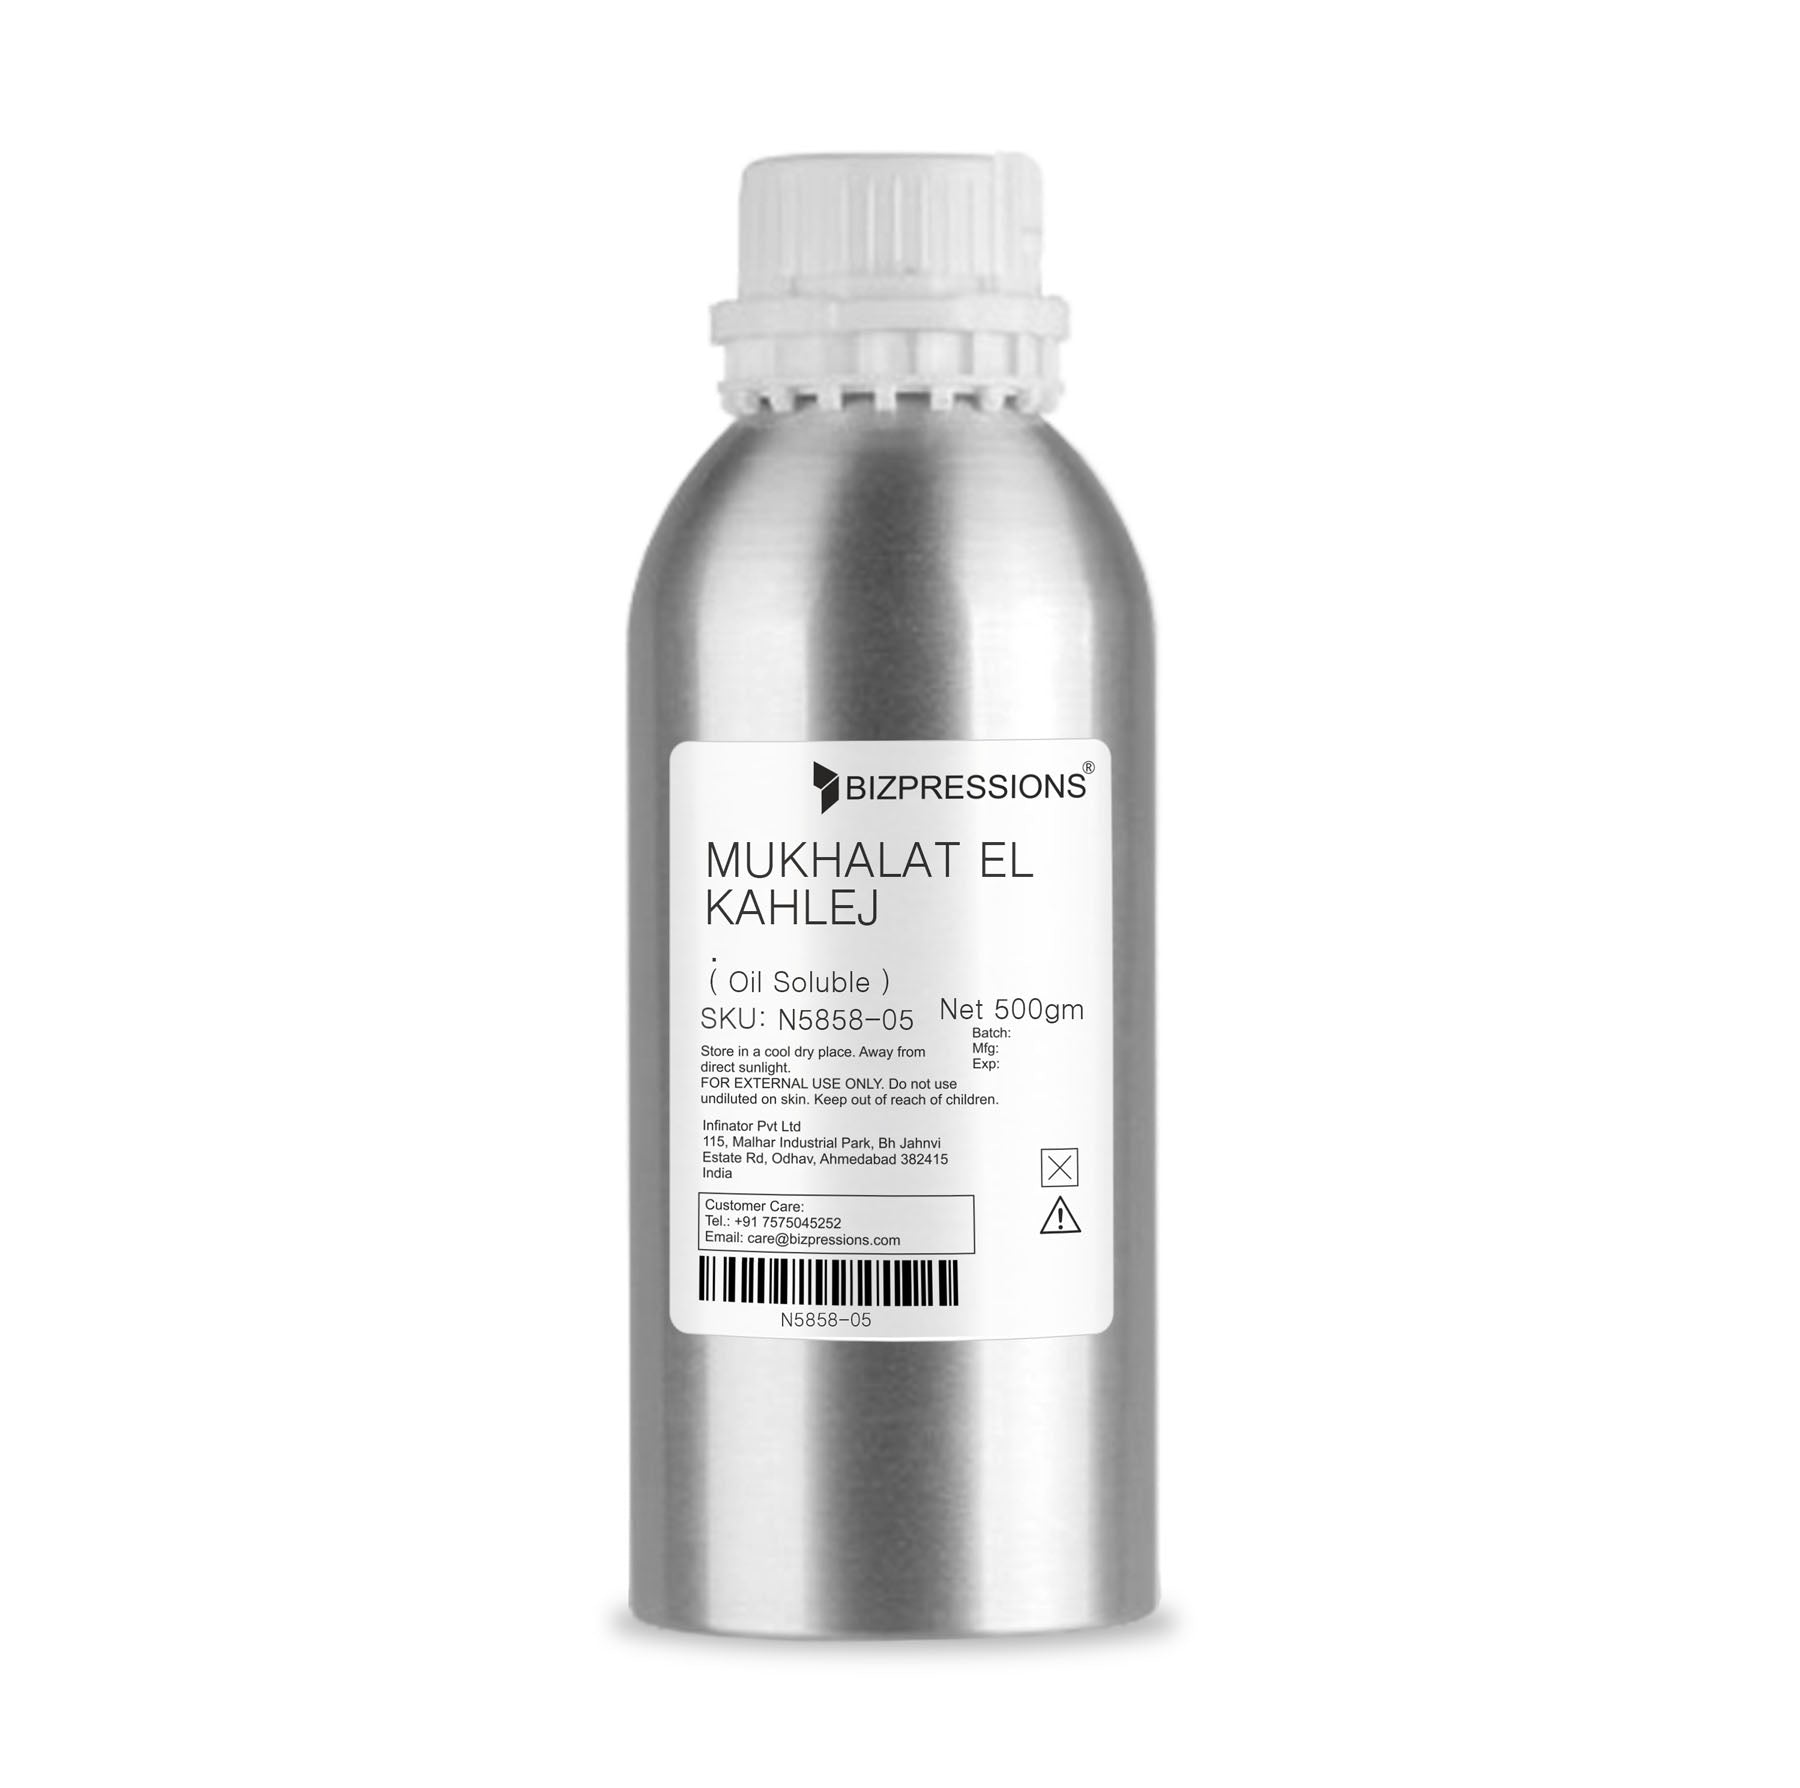 MUKHALAT EL KAHLEJ - Fragrance ( Oil Soluble ) - 500 gm